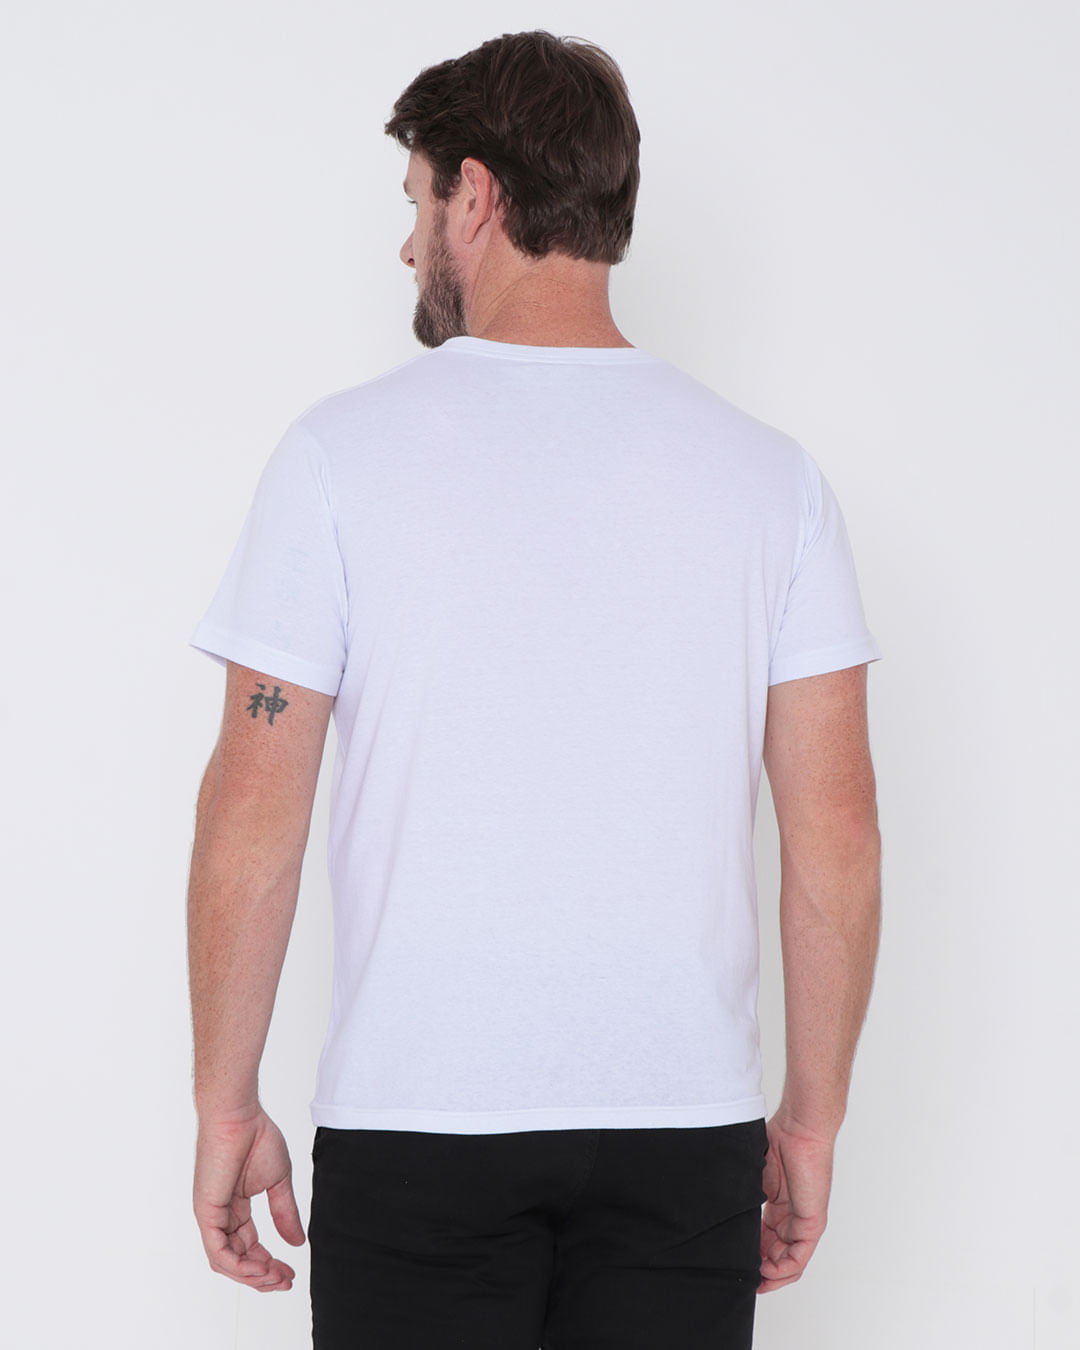 Camiseta-Masculina-Estampa-Paizao-Branca